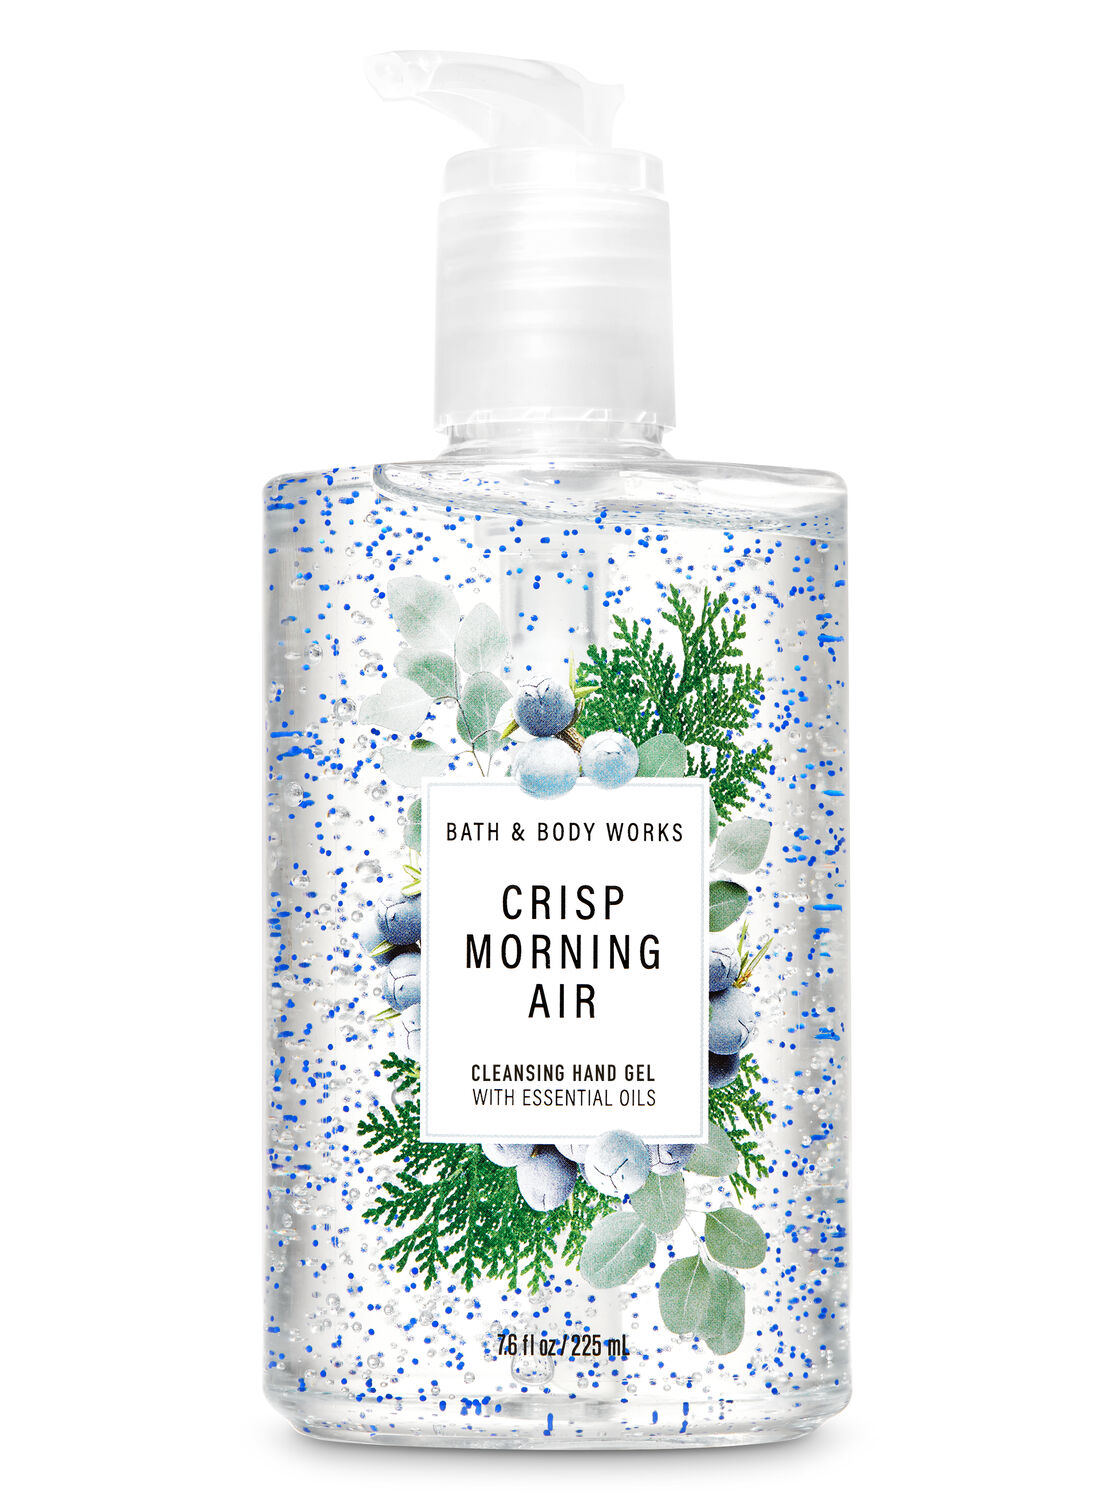 Crisp Morning Air Hand Sanitizer, 7.6 fl oz